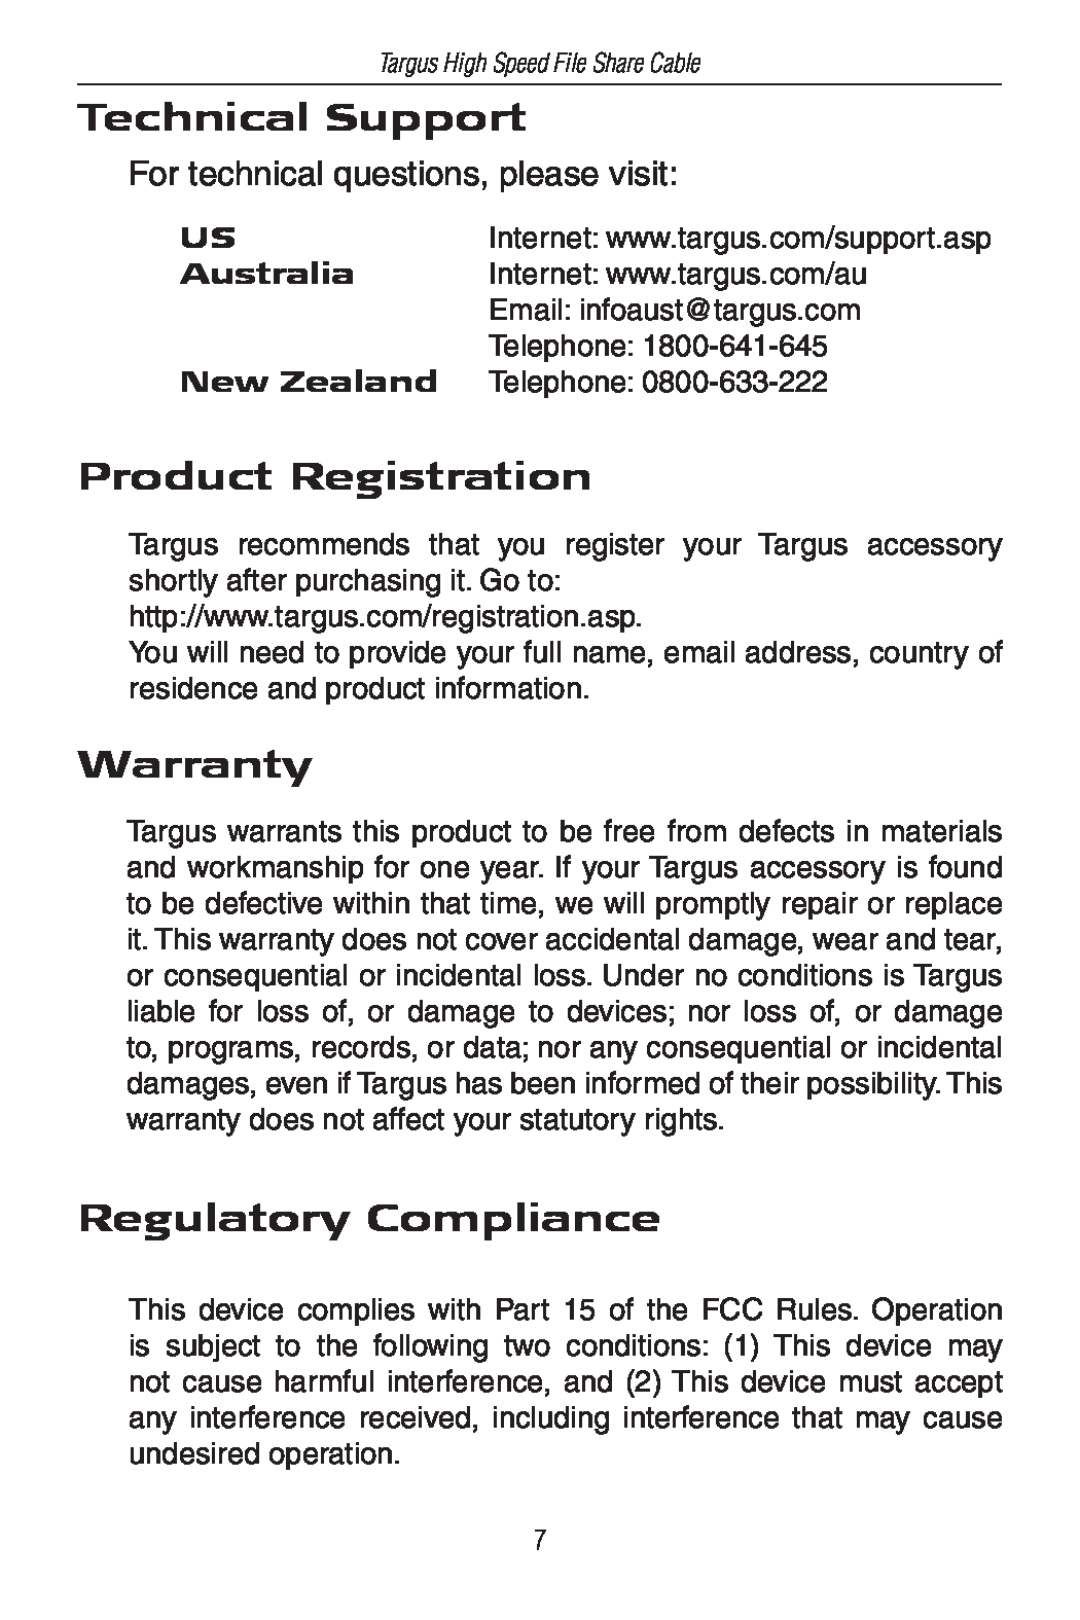 Targus ACC96US Australia, New Zealand, Technical Support, Product Registration, Warranty, Regulatory Compliance 